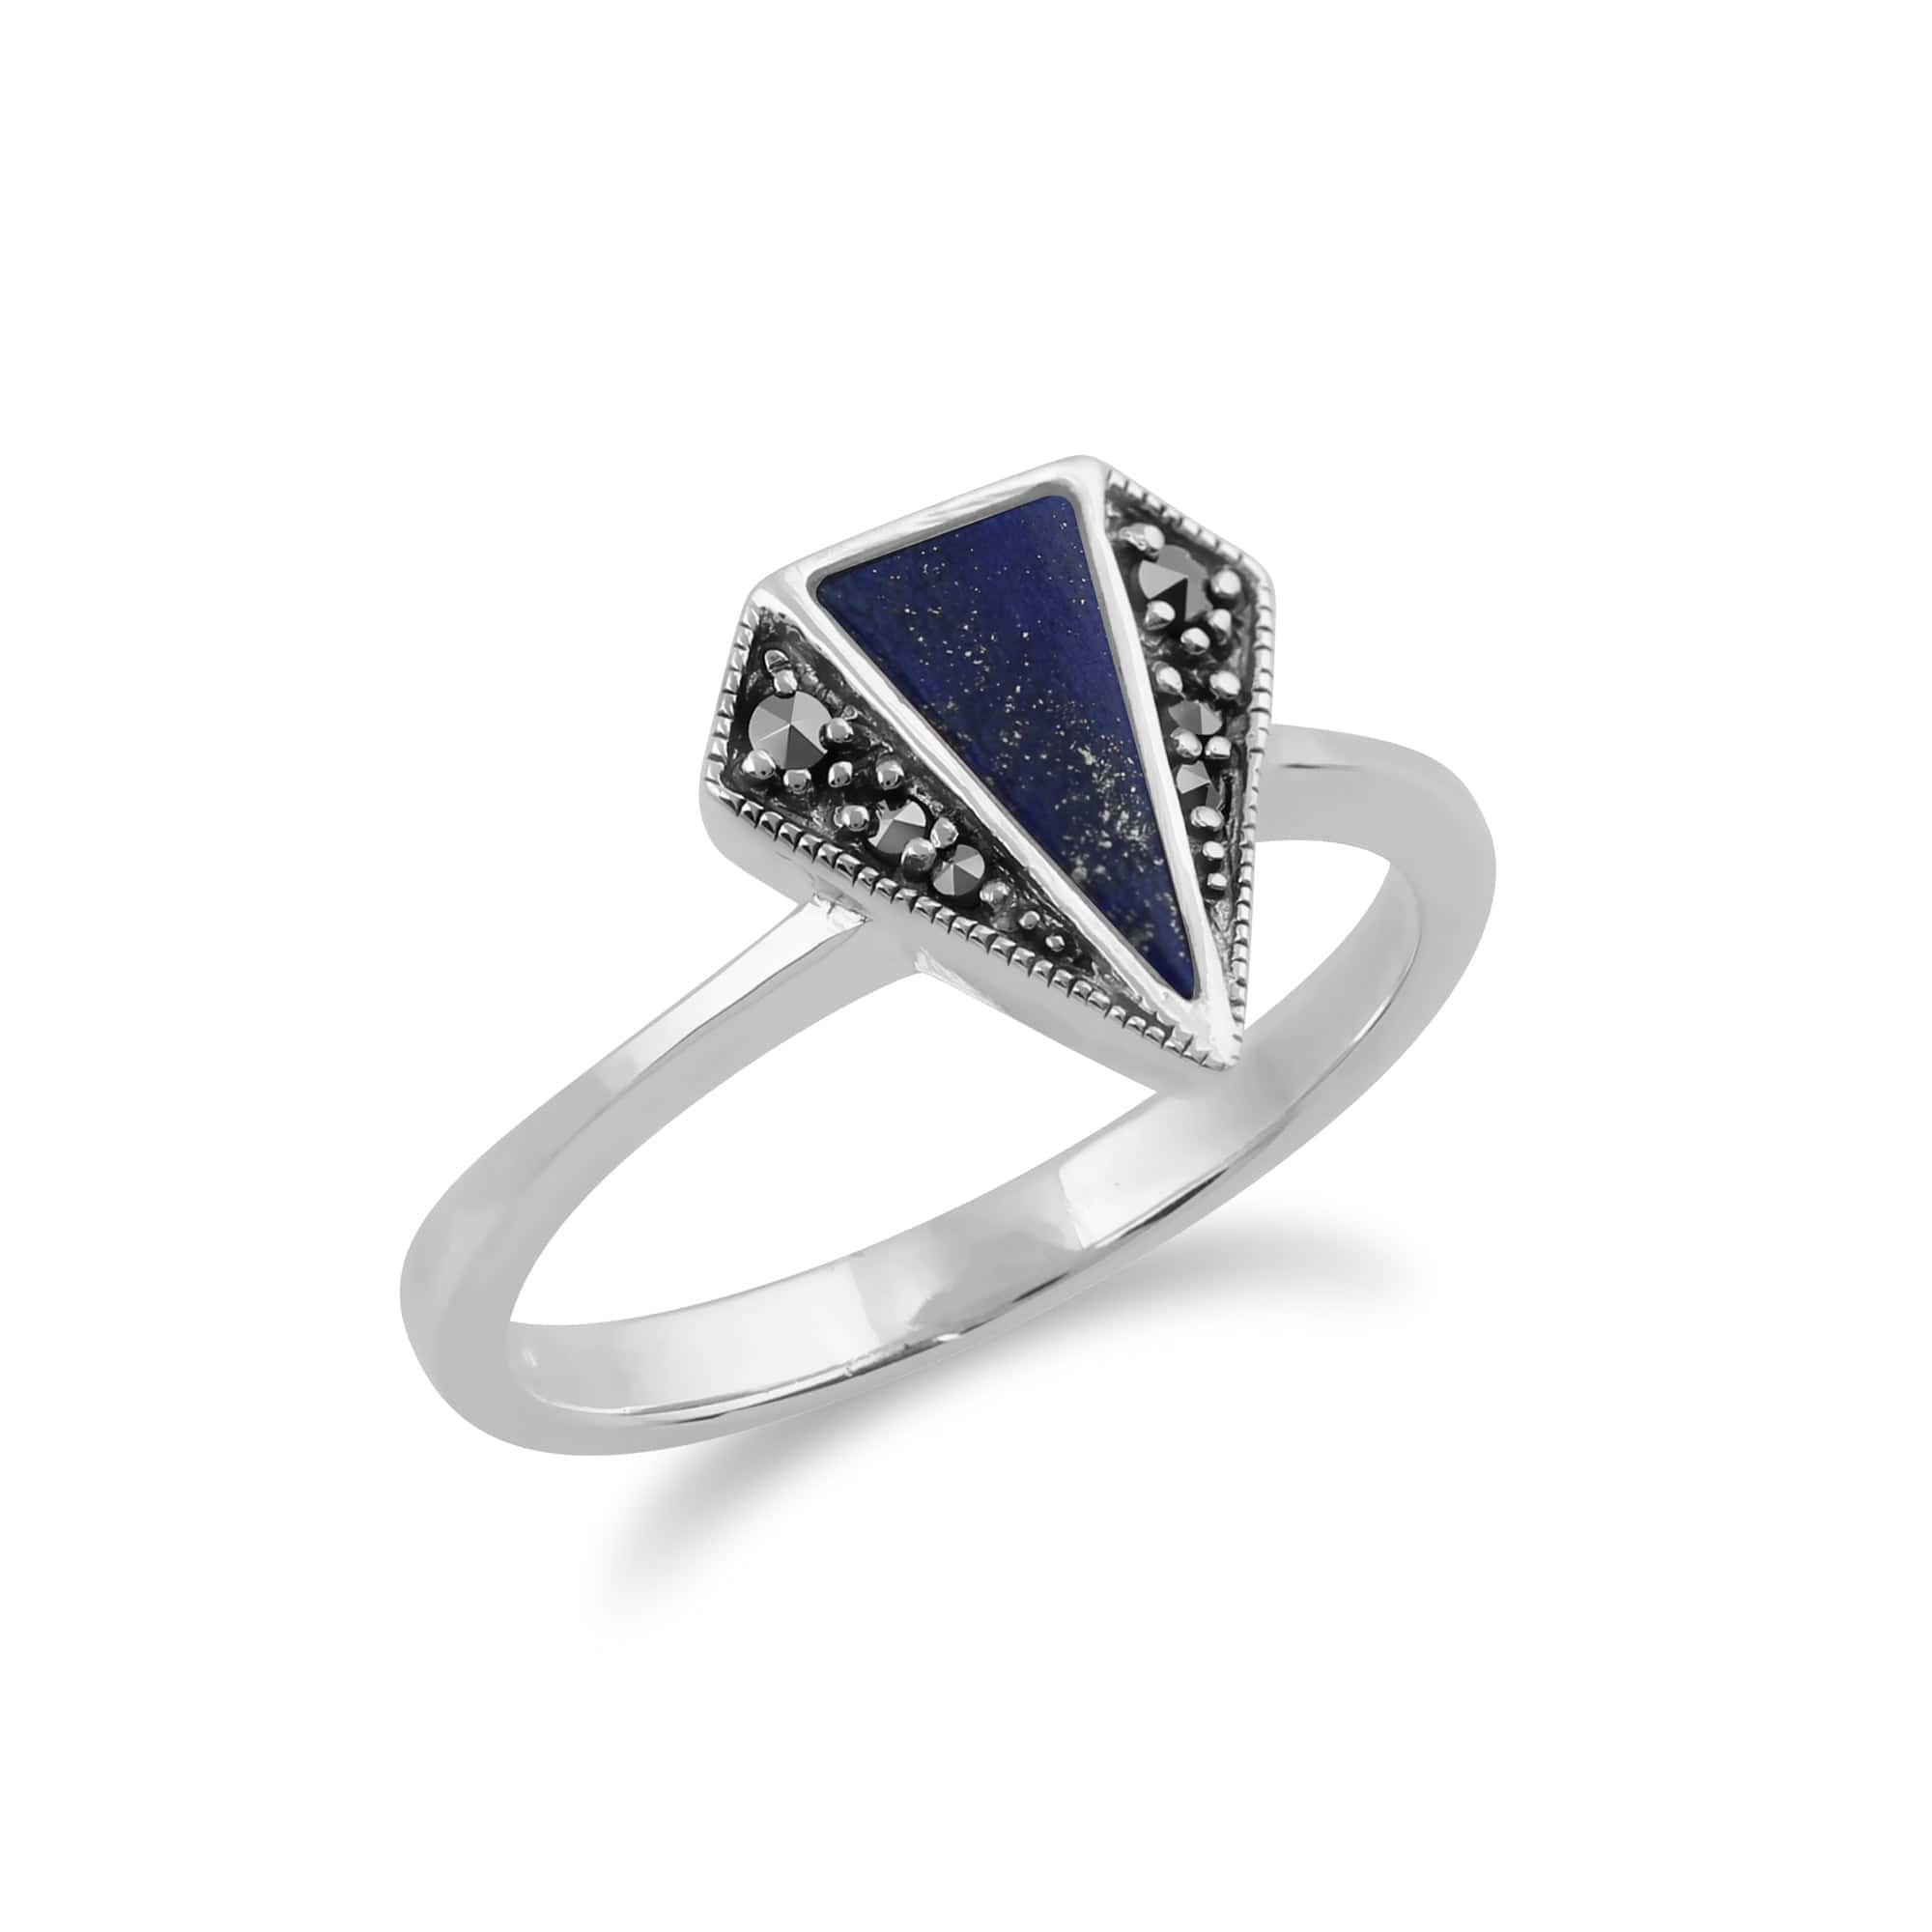 Gemondo 925 Sterling Silver Lapis Lazuli & Marcasite Art Deco Ring Image 2